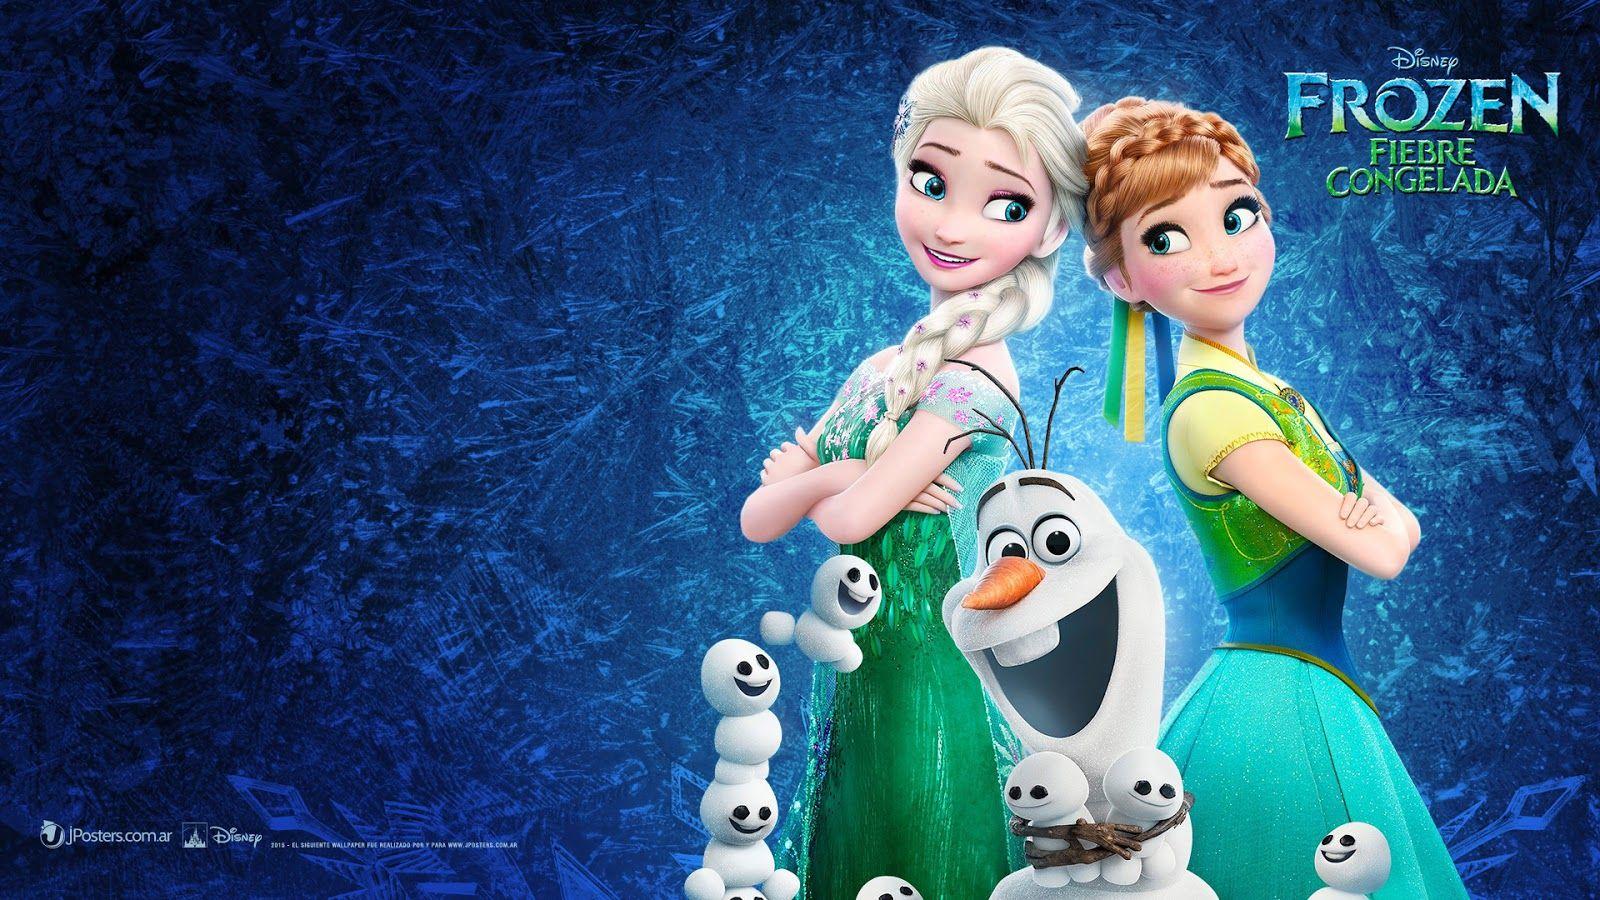 Disney Frozen Elsa HD Wallpaper. image Of Frozen Full Movie